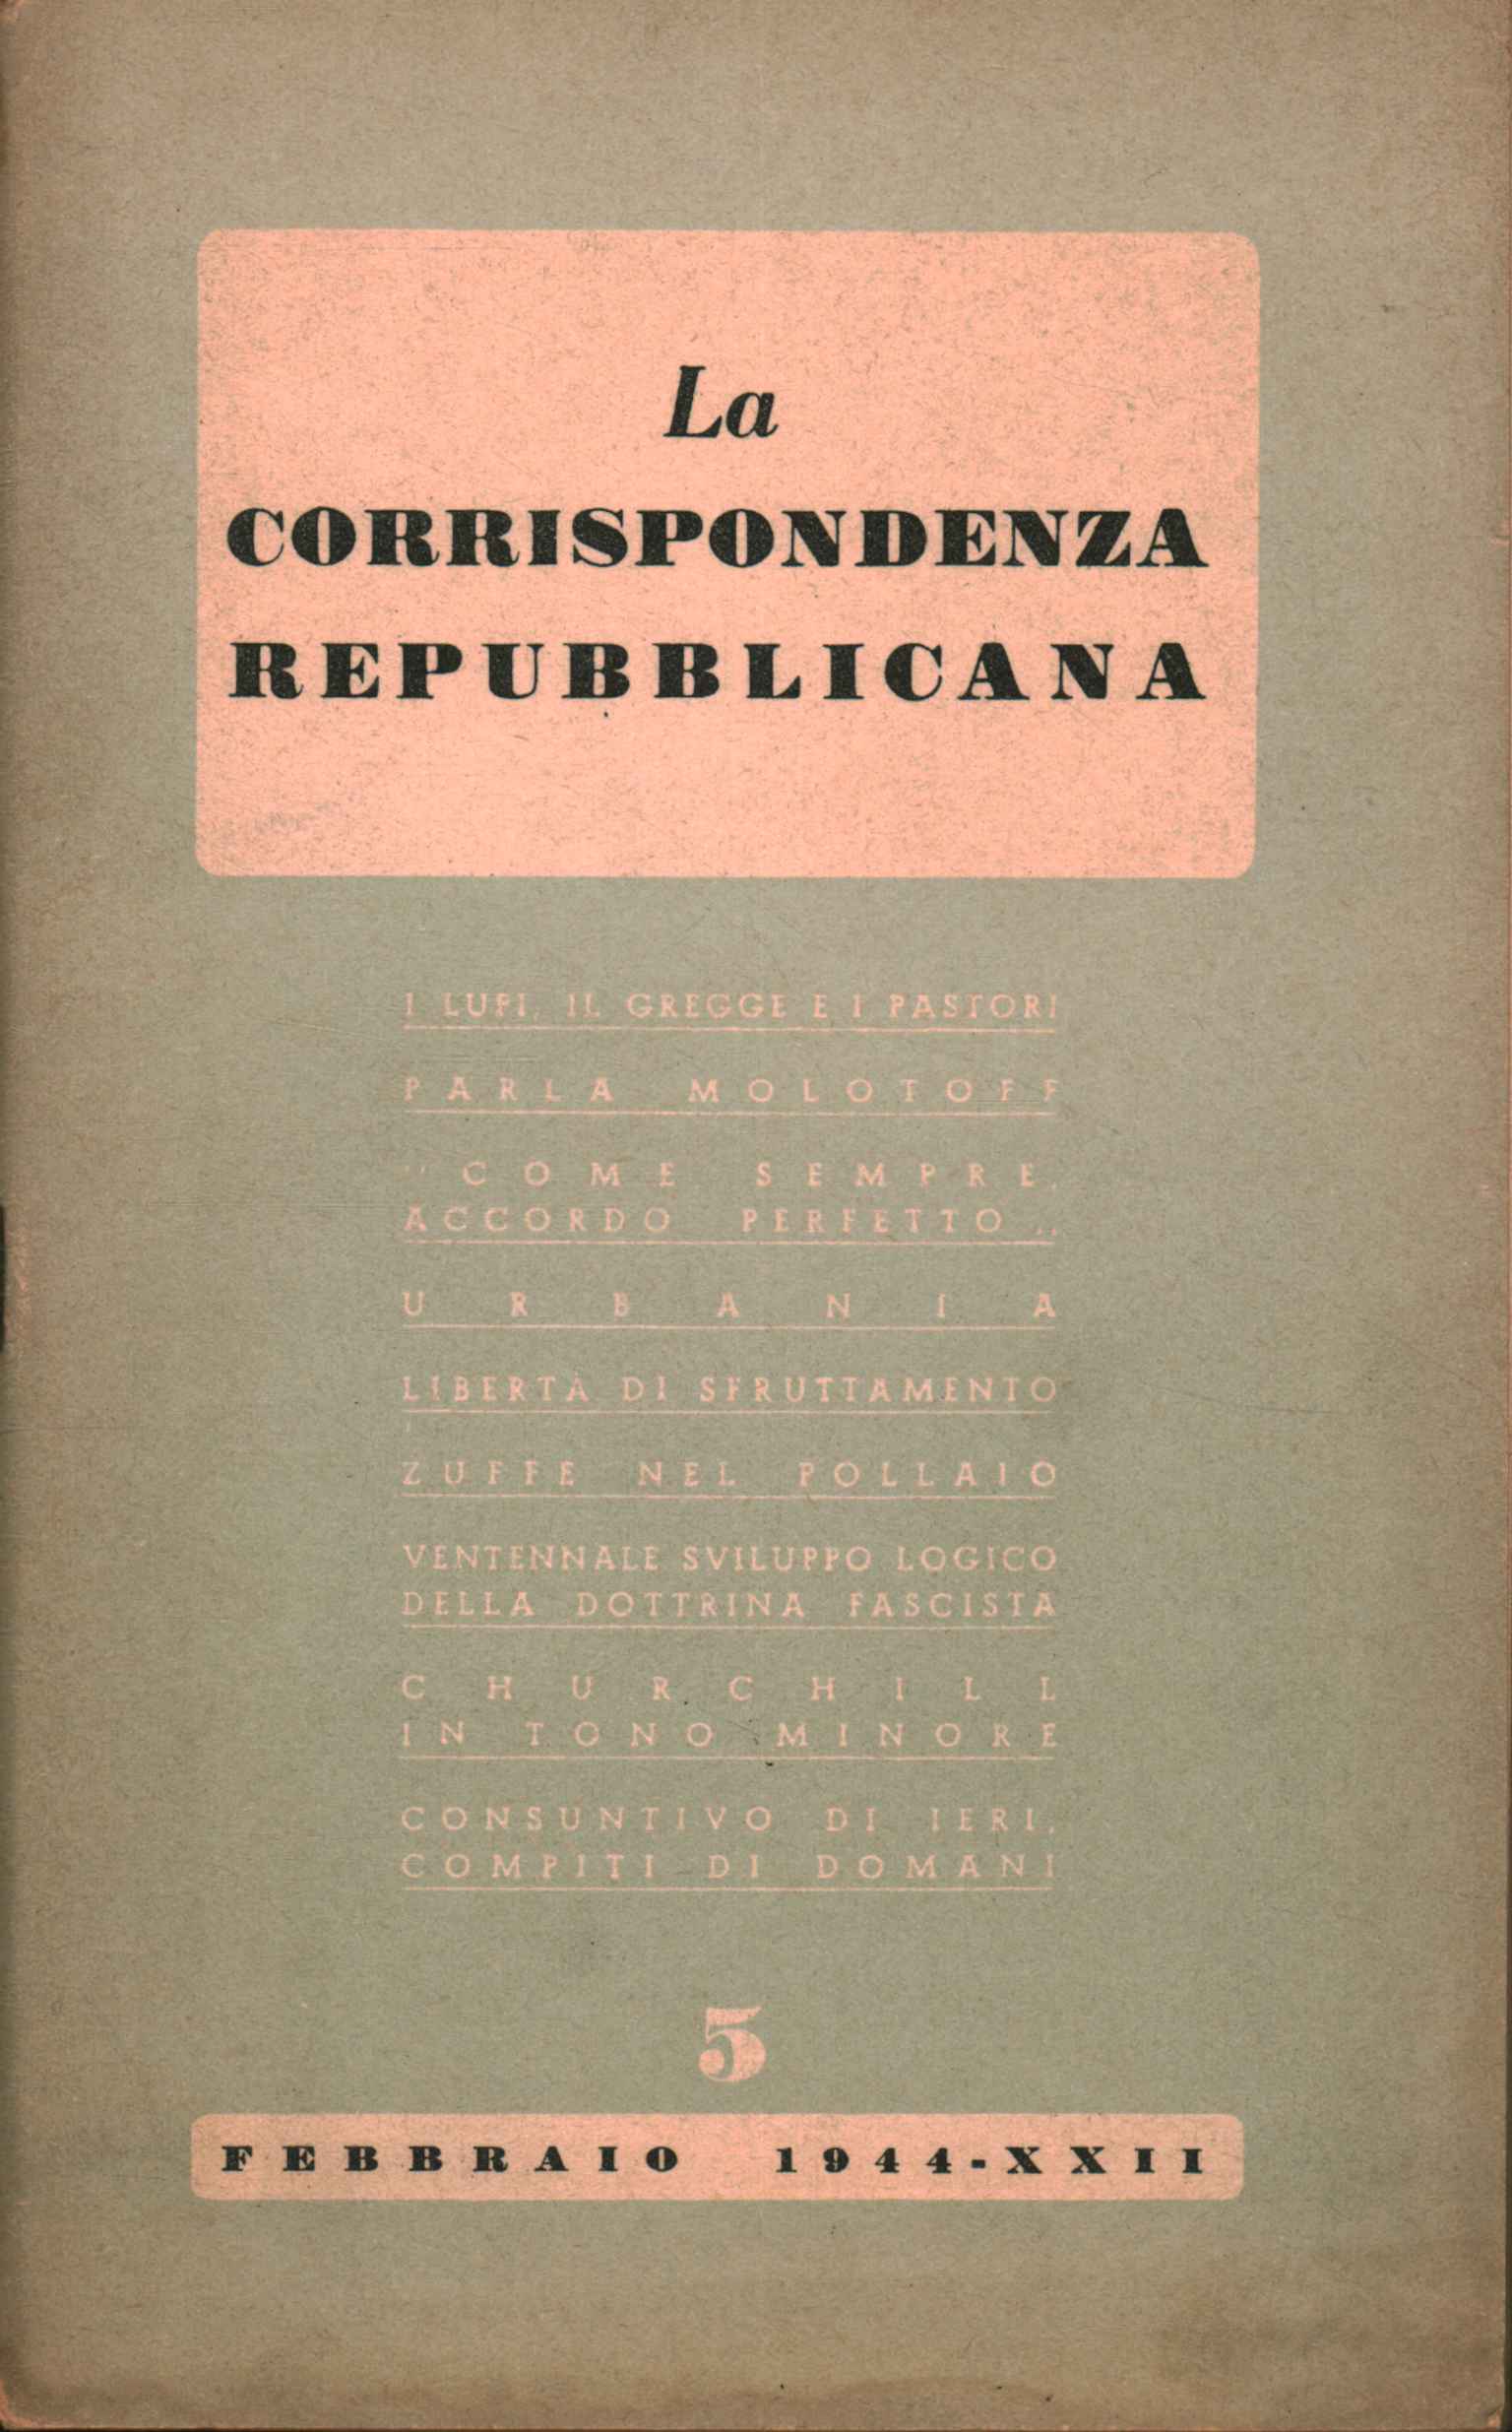 Republican correspondence (1944-XXII)%2,Republican correspondence (1944-XXII)%2